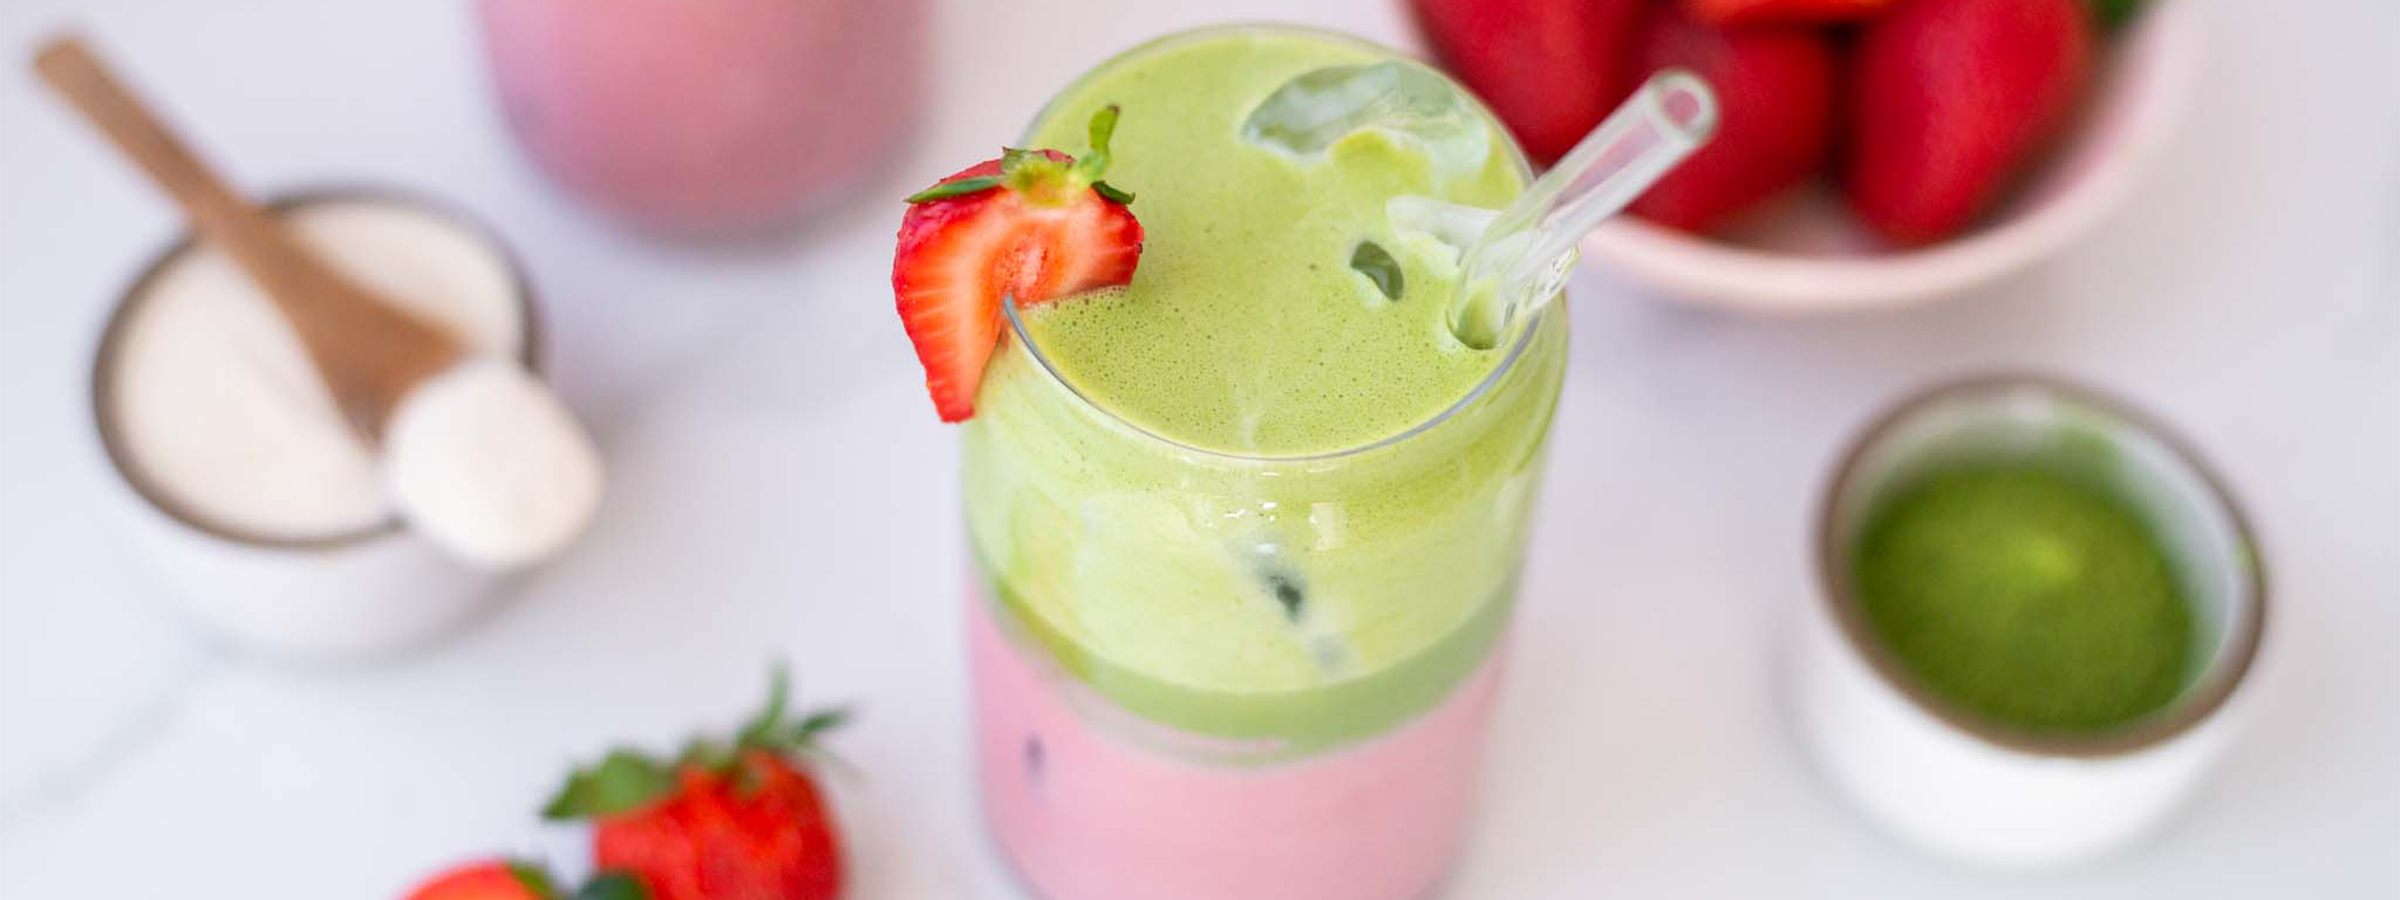 glass of strawberry matcha with strawberries, matcha, and oat milk powder around it